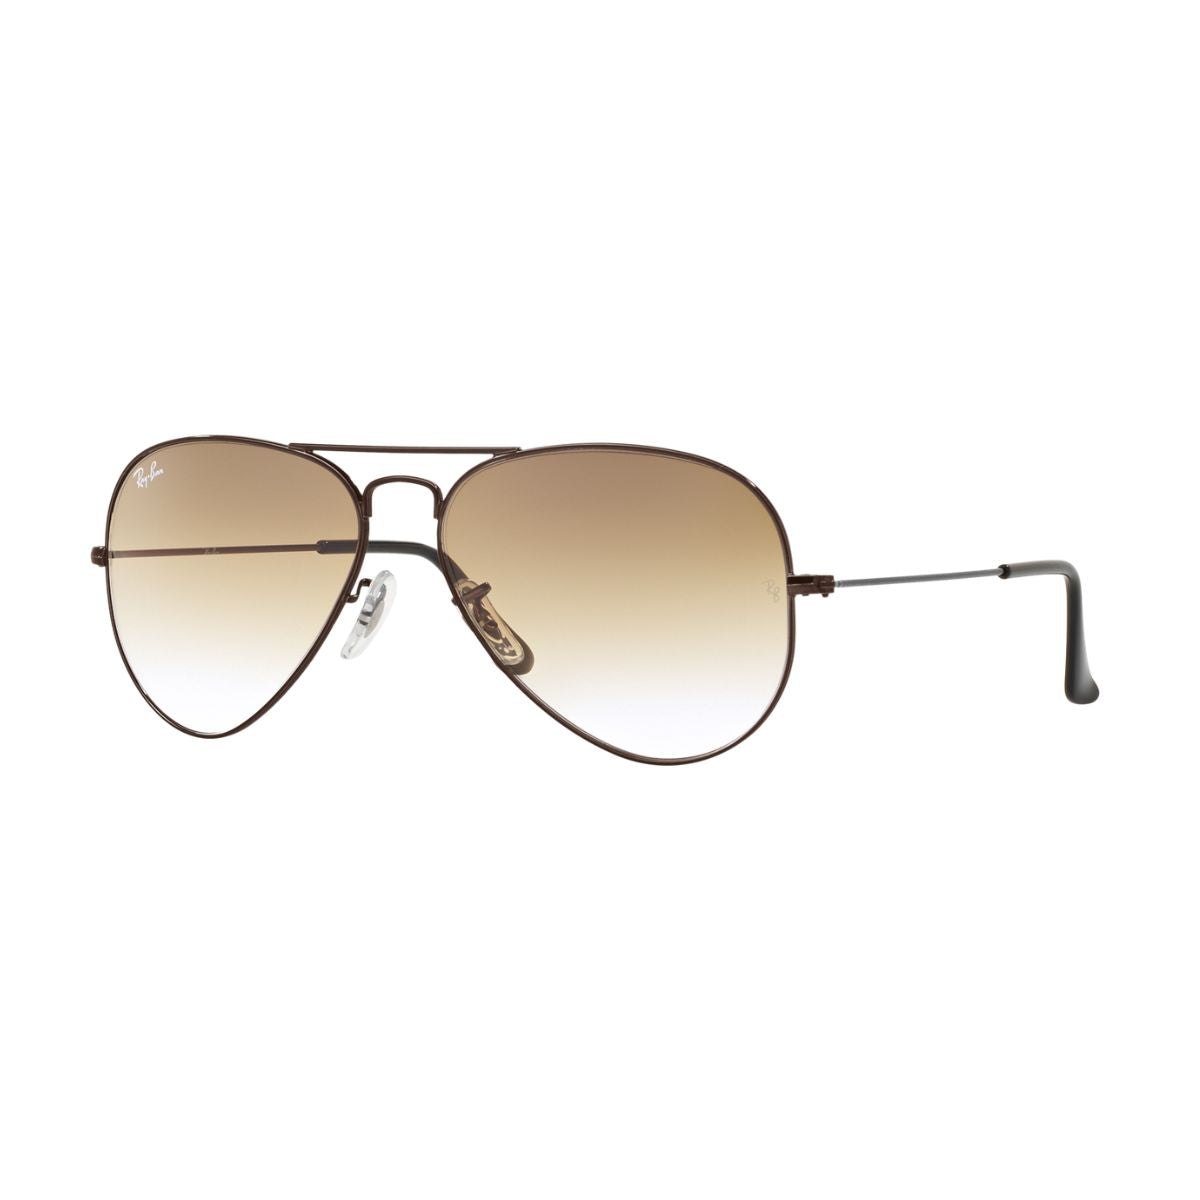 "Rayban 3025  014/51  UV Protection Fashionable  Aviator Sunglasses At Optorium"